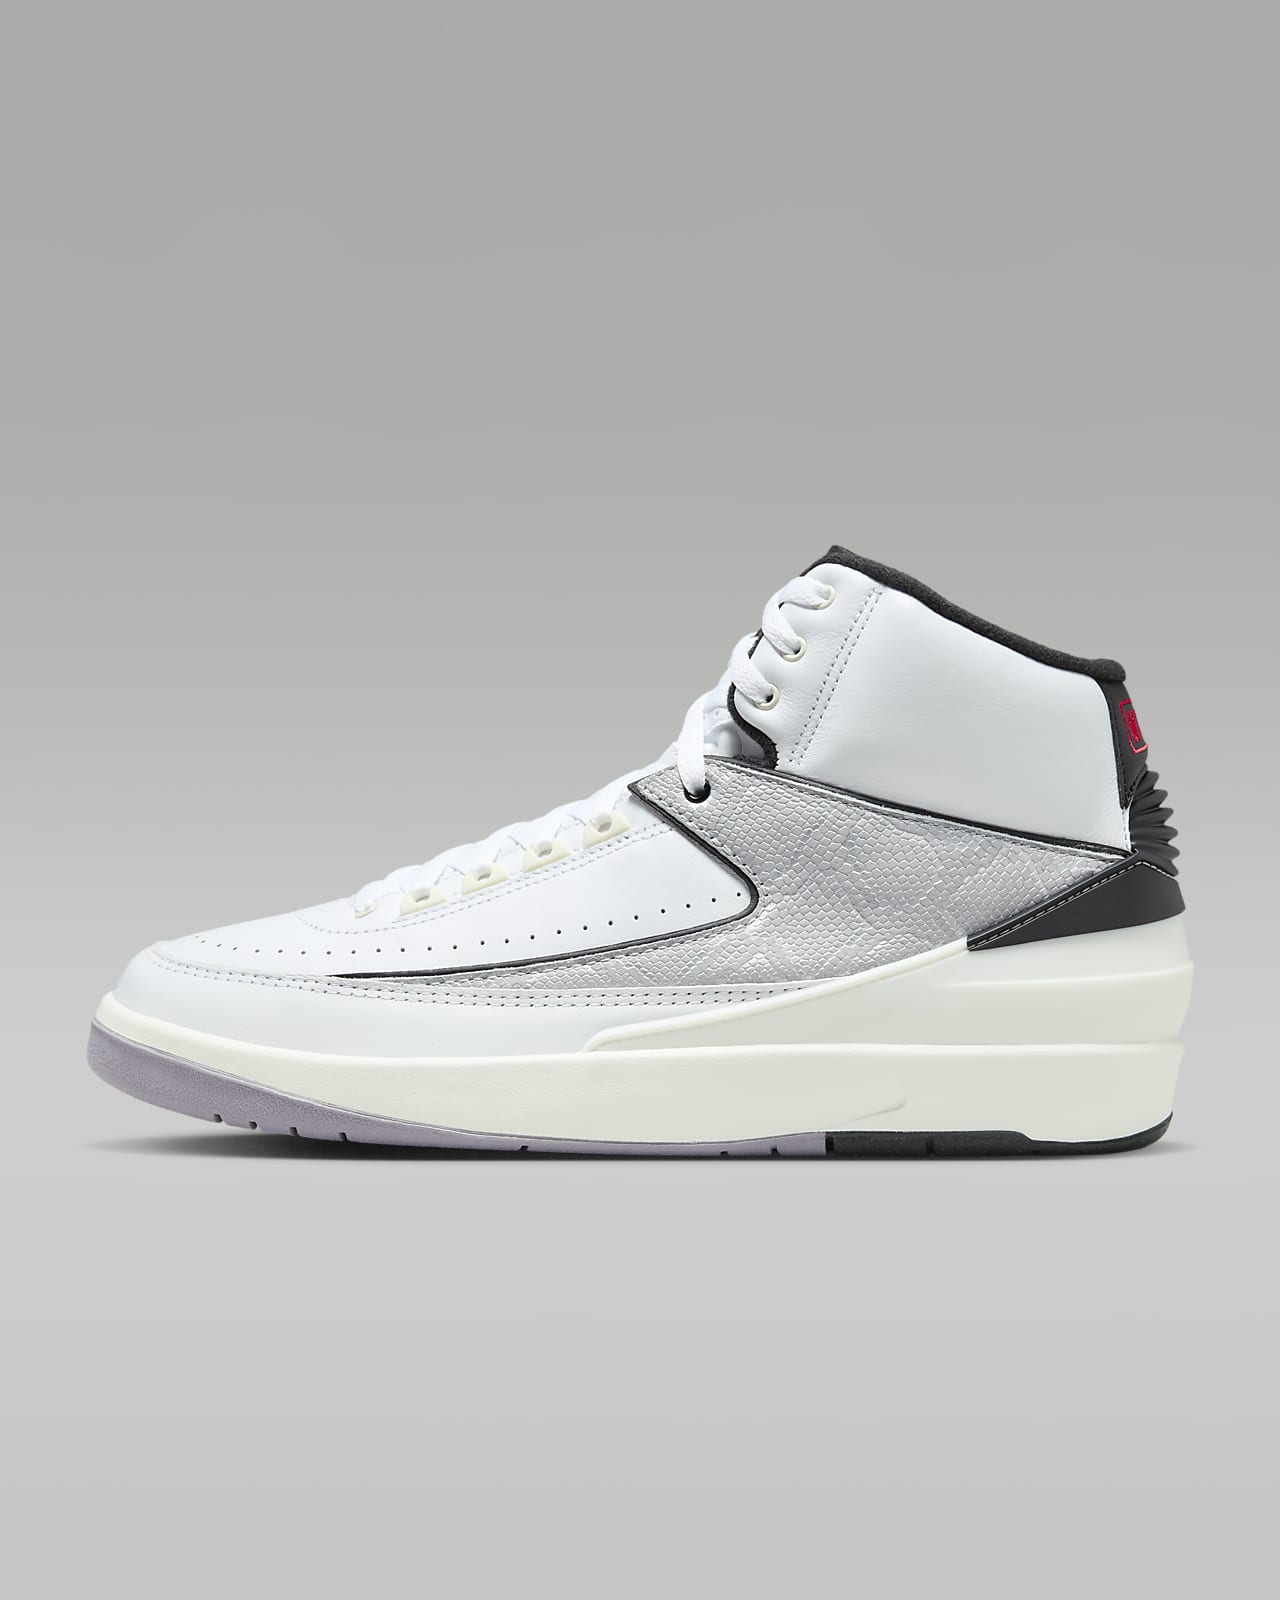 Air Jordan 2 Retro "Python" Men's Shoes